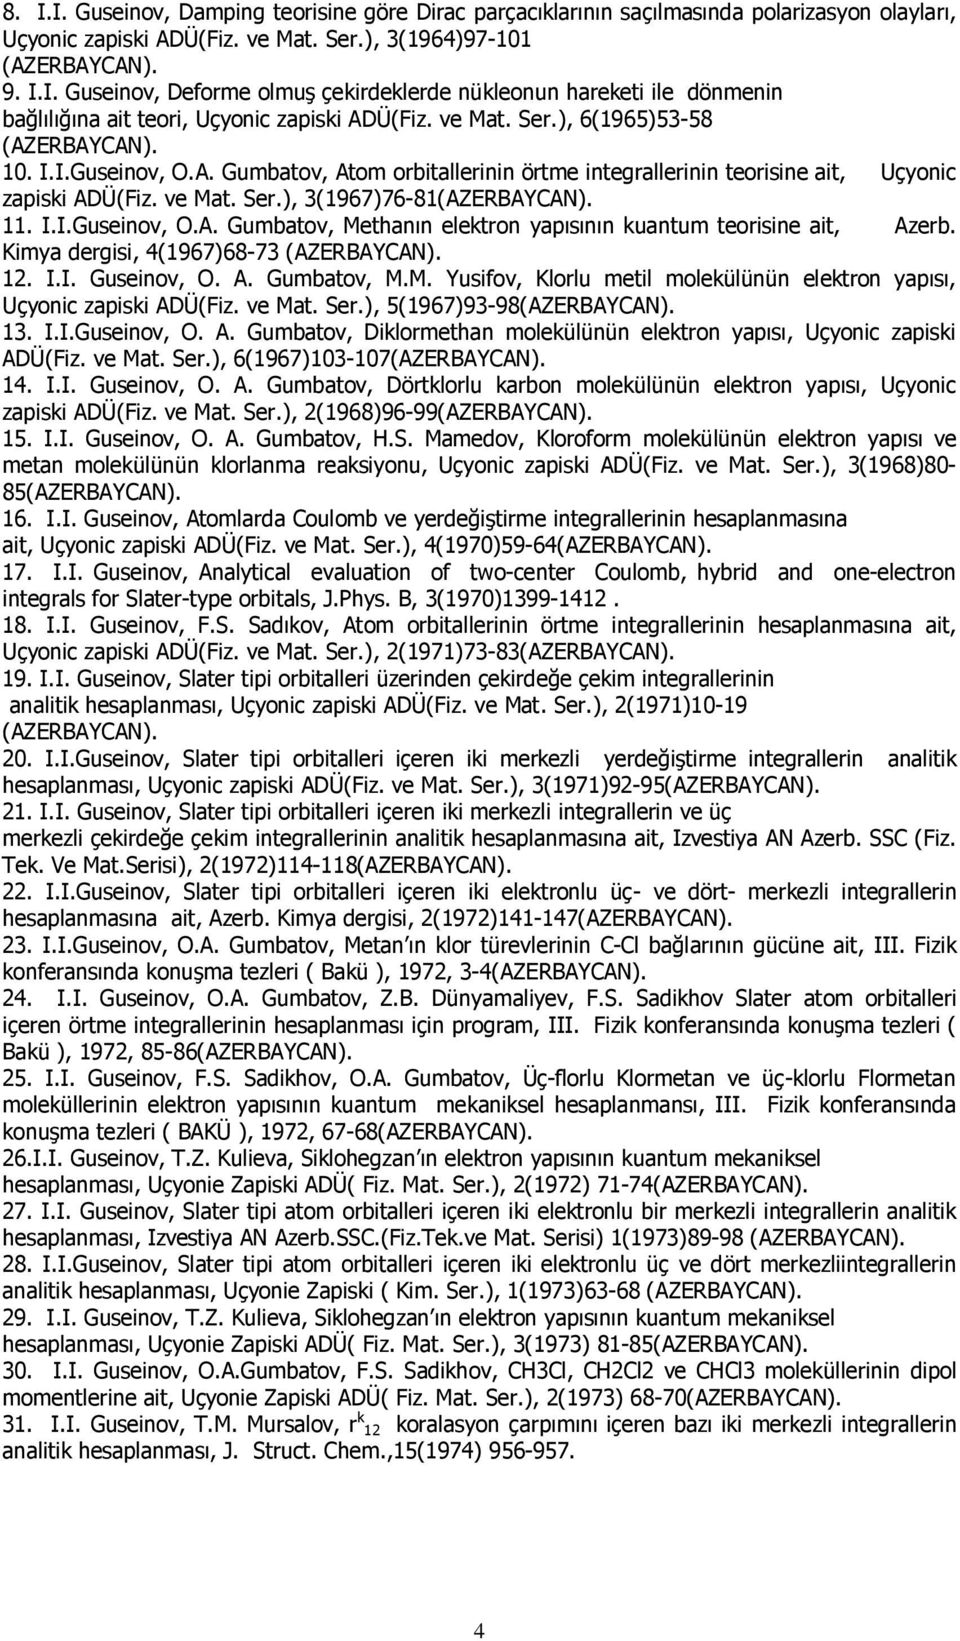 Kimya dergisi, 4(1967)68-73 12. I.I. Guseinov, O. A. Gumbatov, M.M. Yusifov, Klorlu metil molekülünün elektron yapısı, Uçyonic zapiski ADÜ(Fiz. ve Mat. Ser.), 5(1967)93-98 13. I.I.Guseinov, O. A. Gumbatov, Diklormethan molekülünün elektron yapısı, Uçyonic zapiski ADÜ(Fiz.